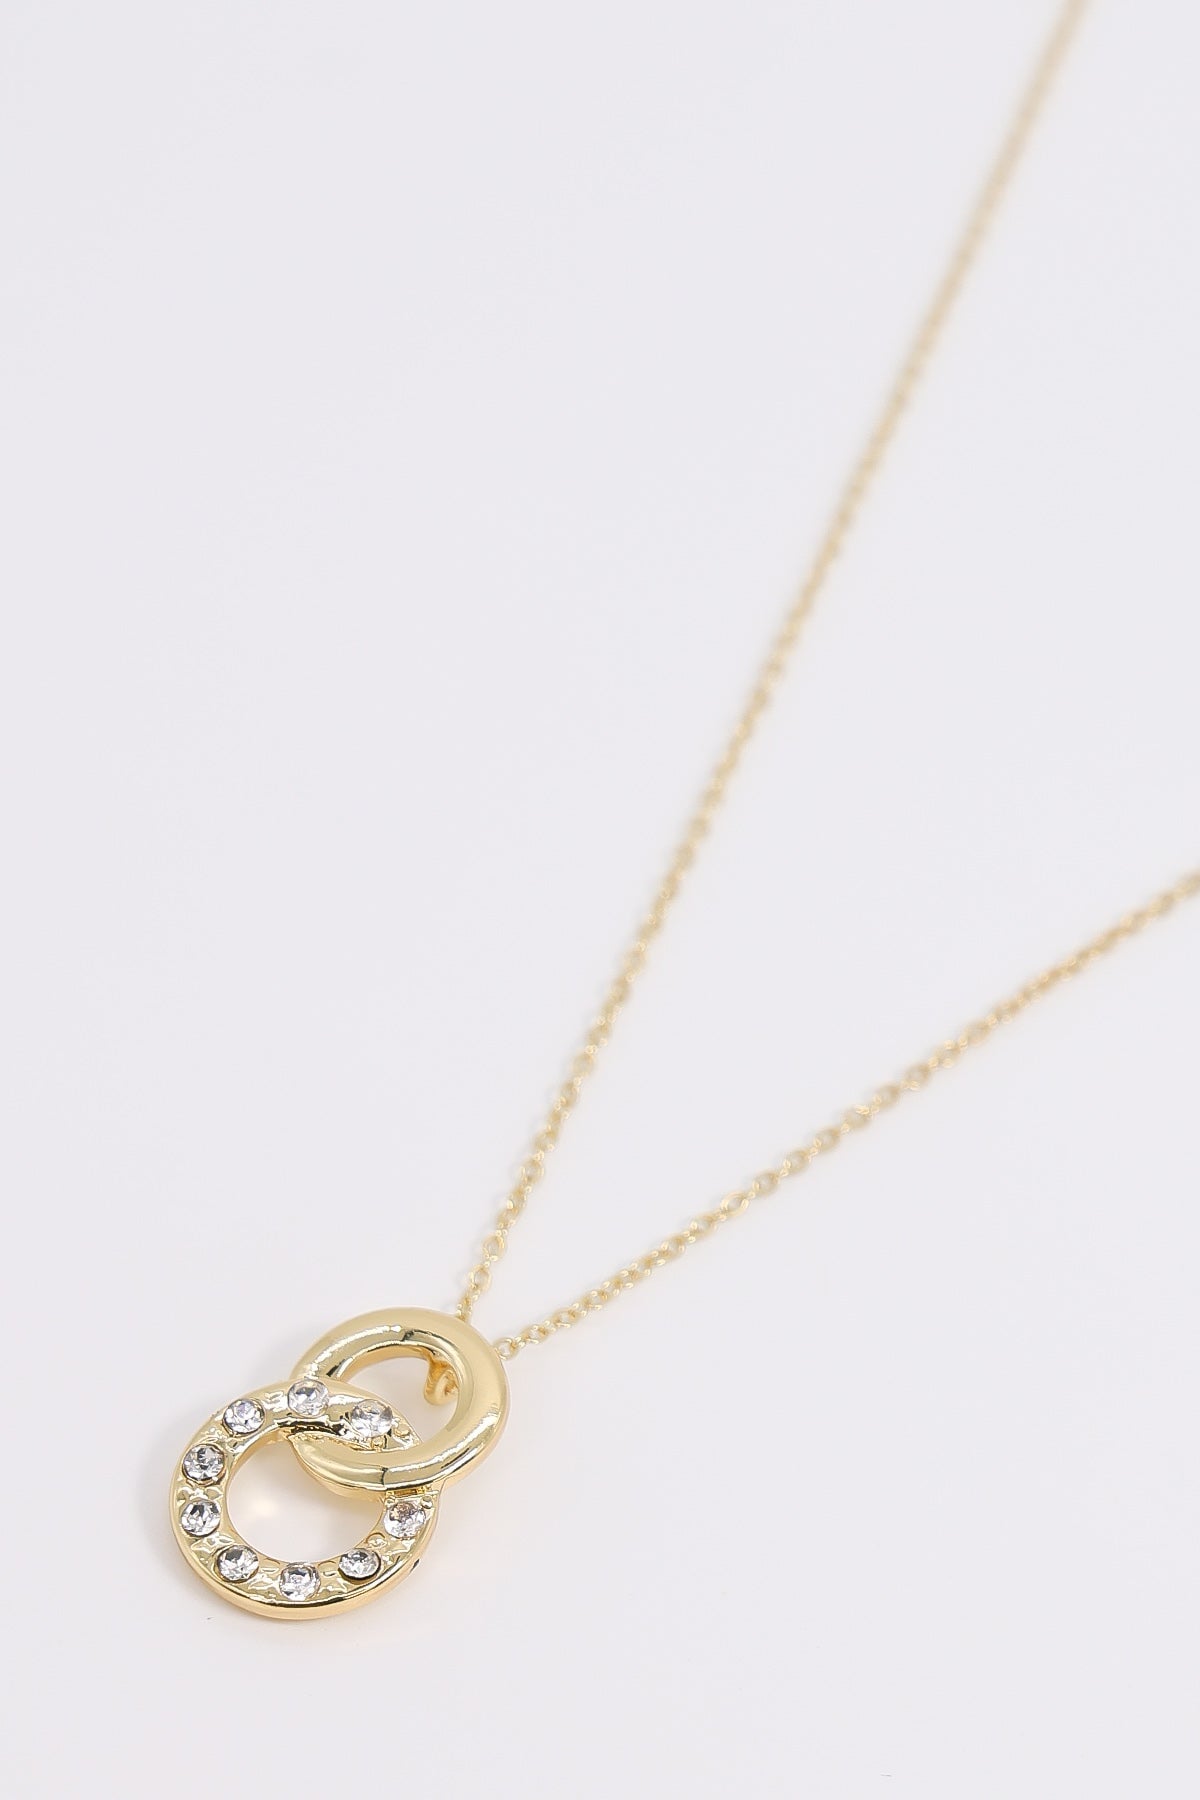 Tiffany & Co. 18K Rose Gold 1837 Interlocking Circles Necklace Chain | eBay